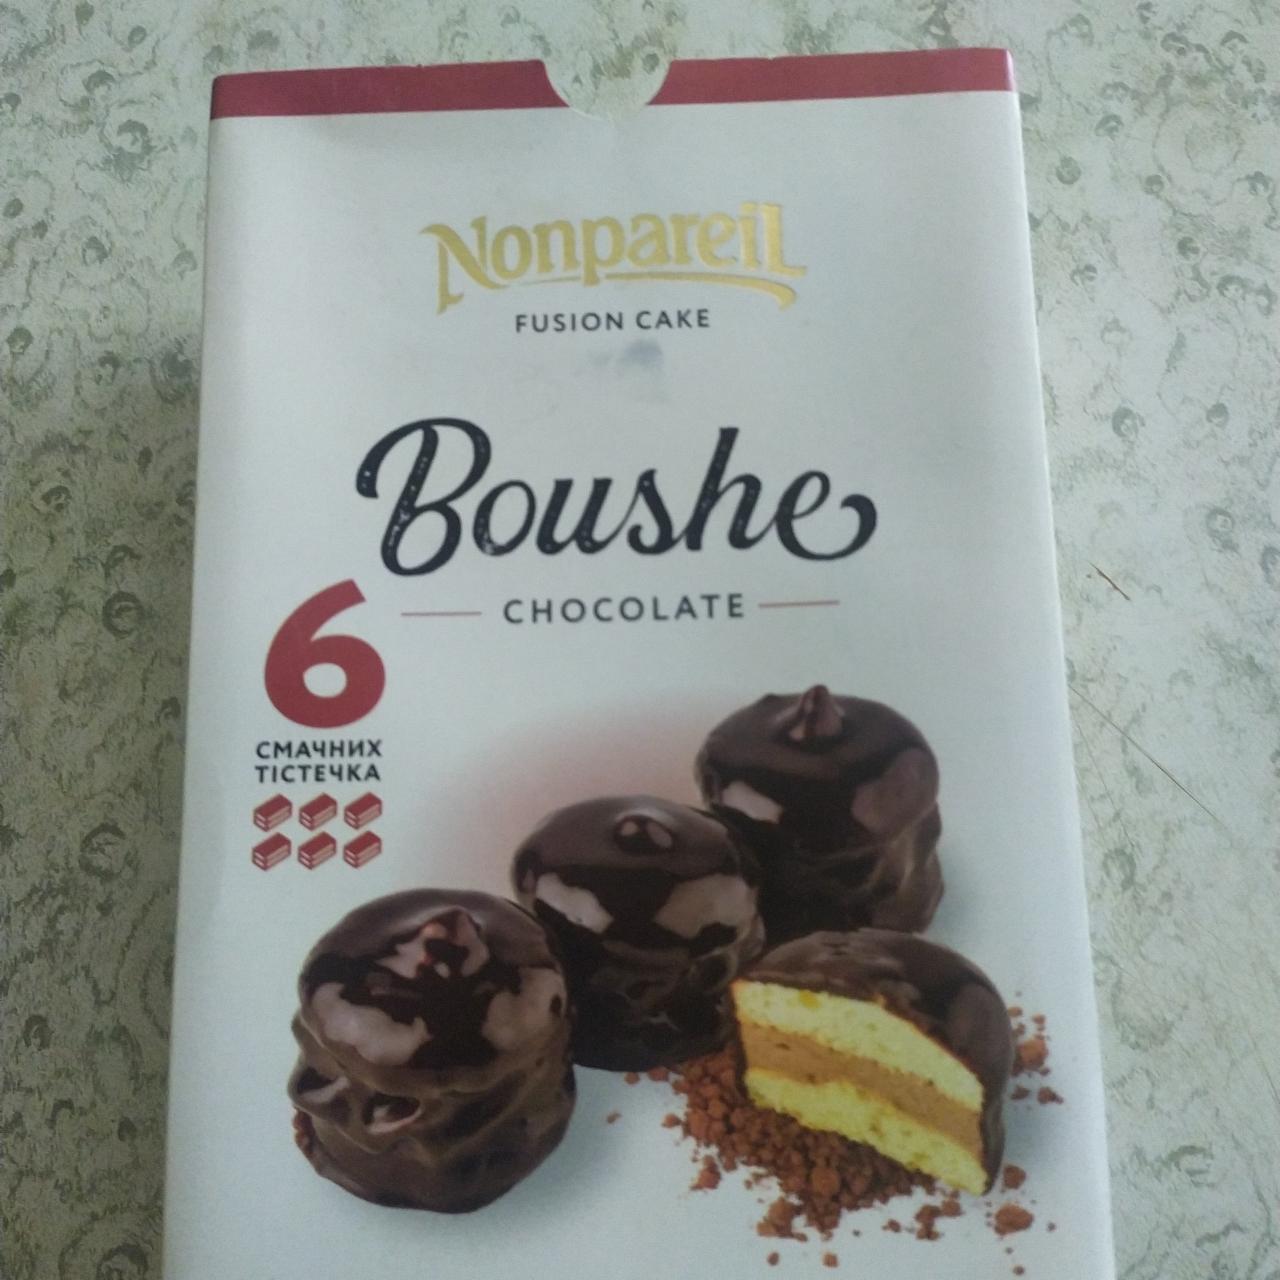 Фото - Boushe chocolate Nonpareil